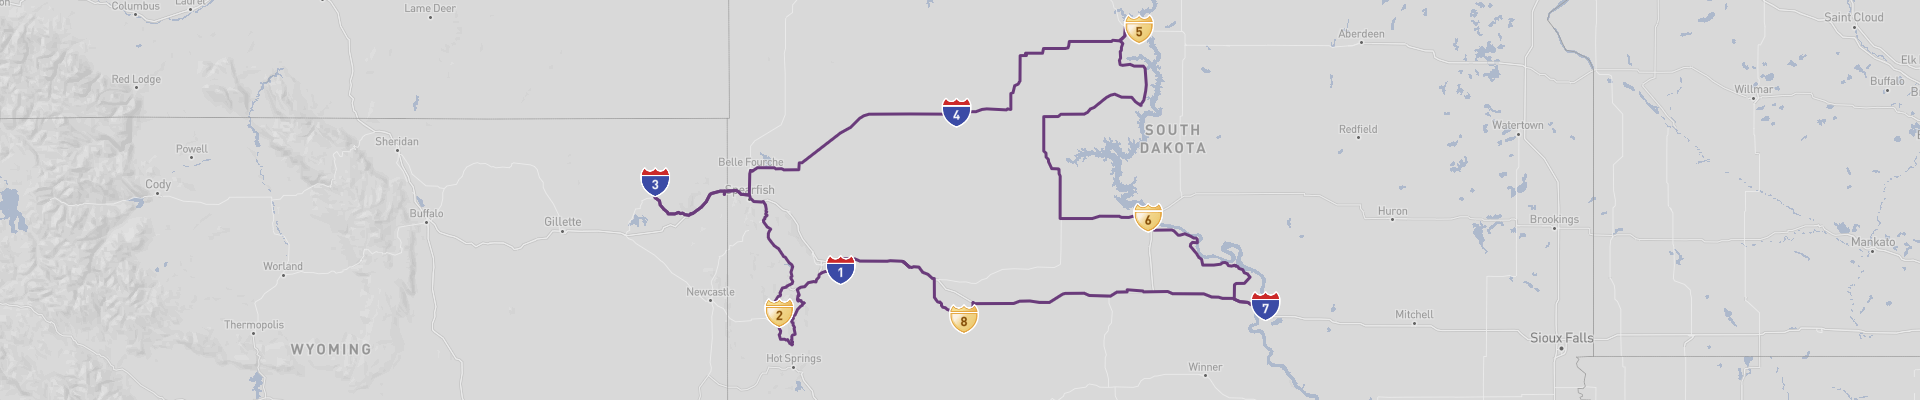 Itinéraire South Dakota 